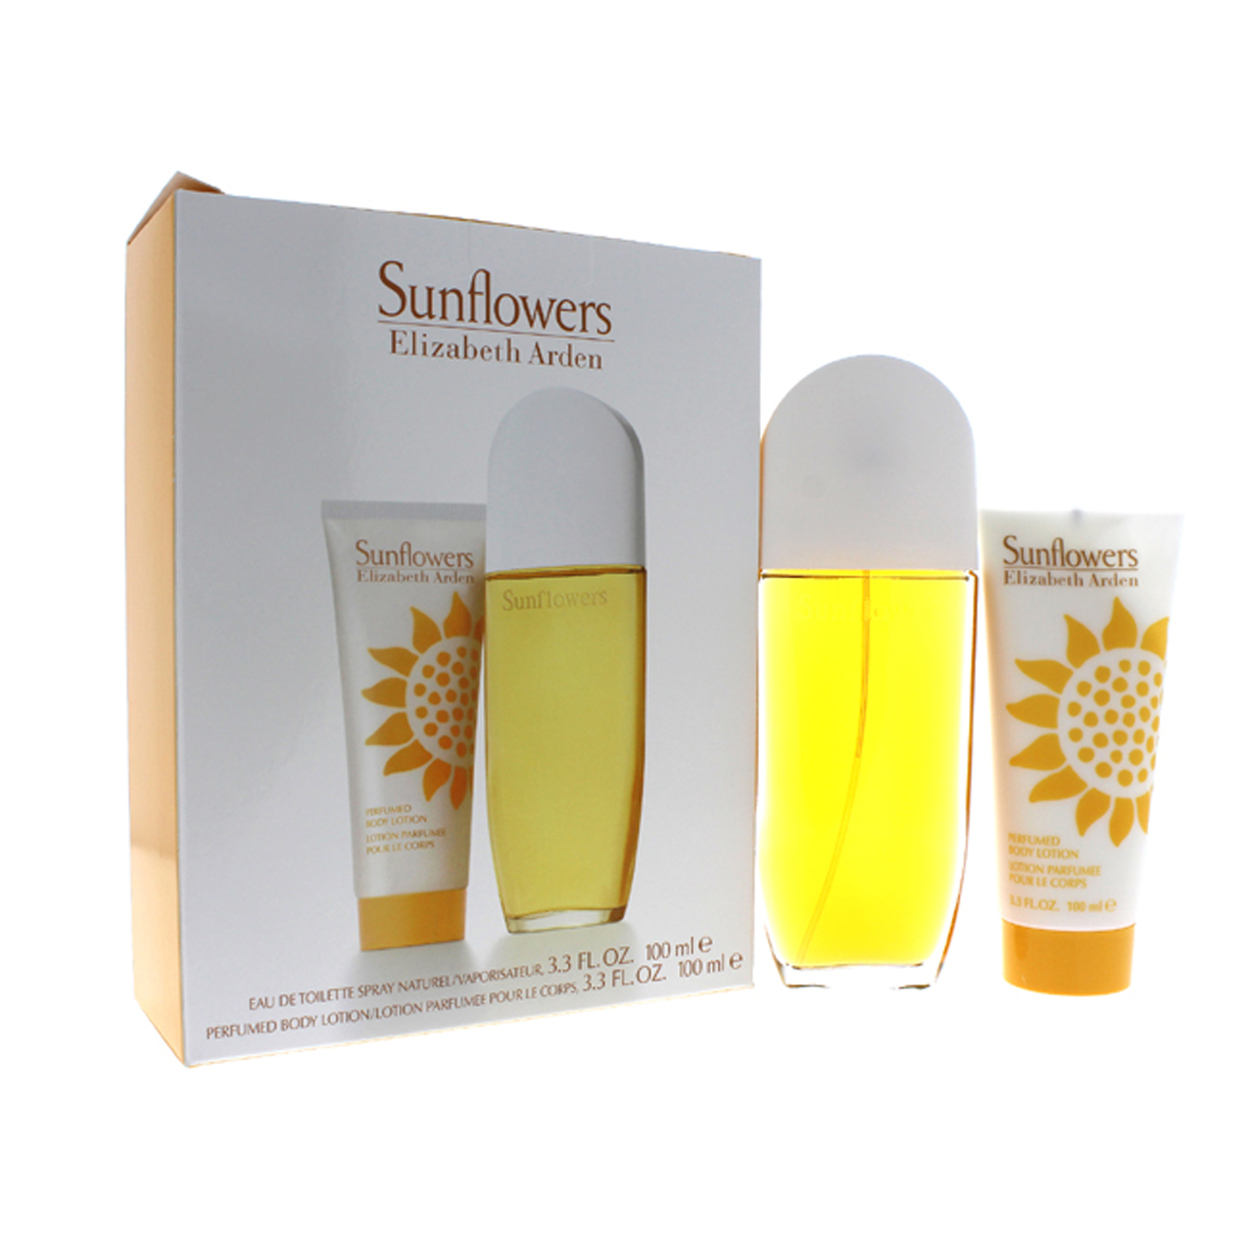 Elizabeth Arden Sunflowers 3.3 Oz EDT Spray, 3.3 Oz Body Lotion 2 Pc Gift Set